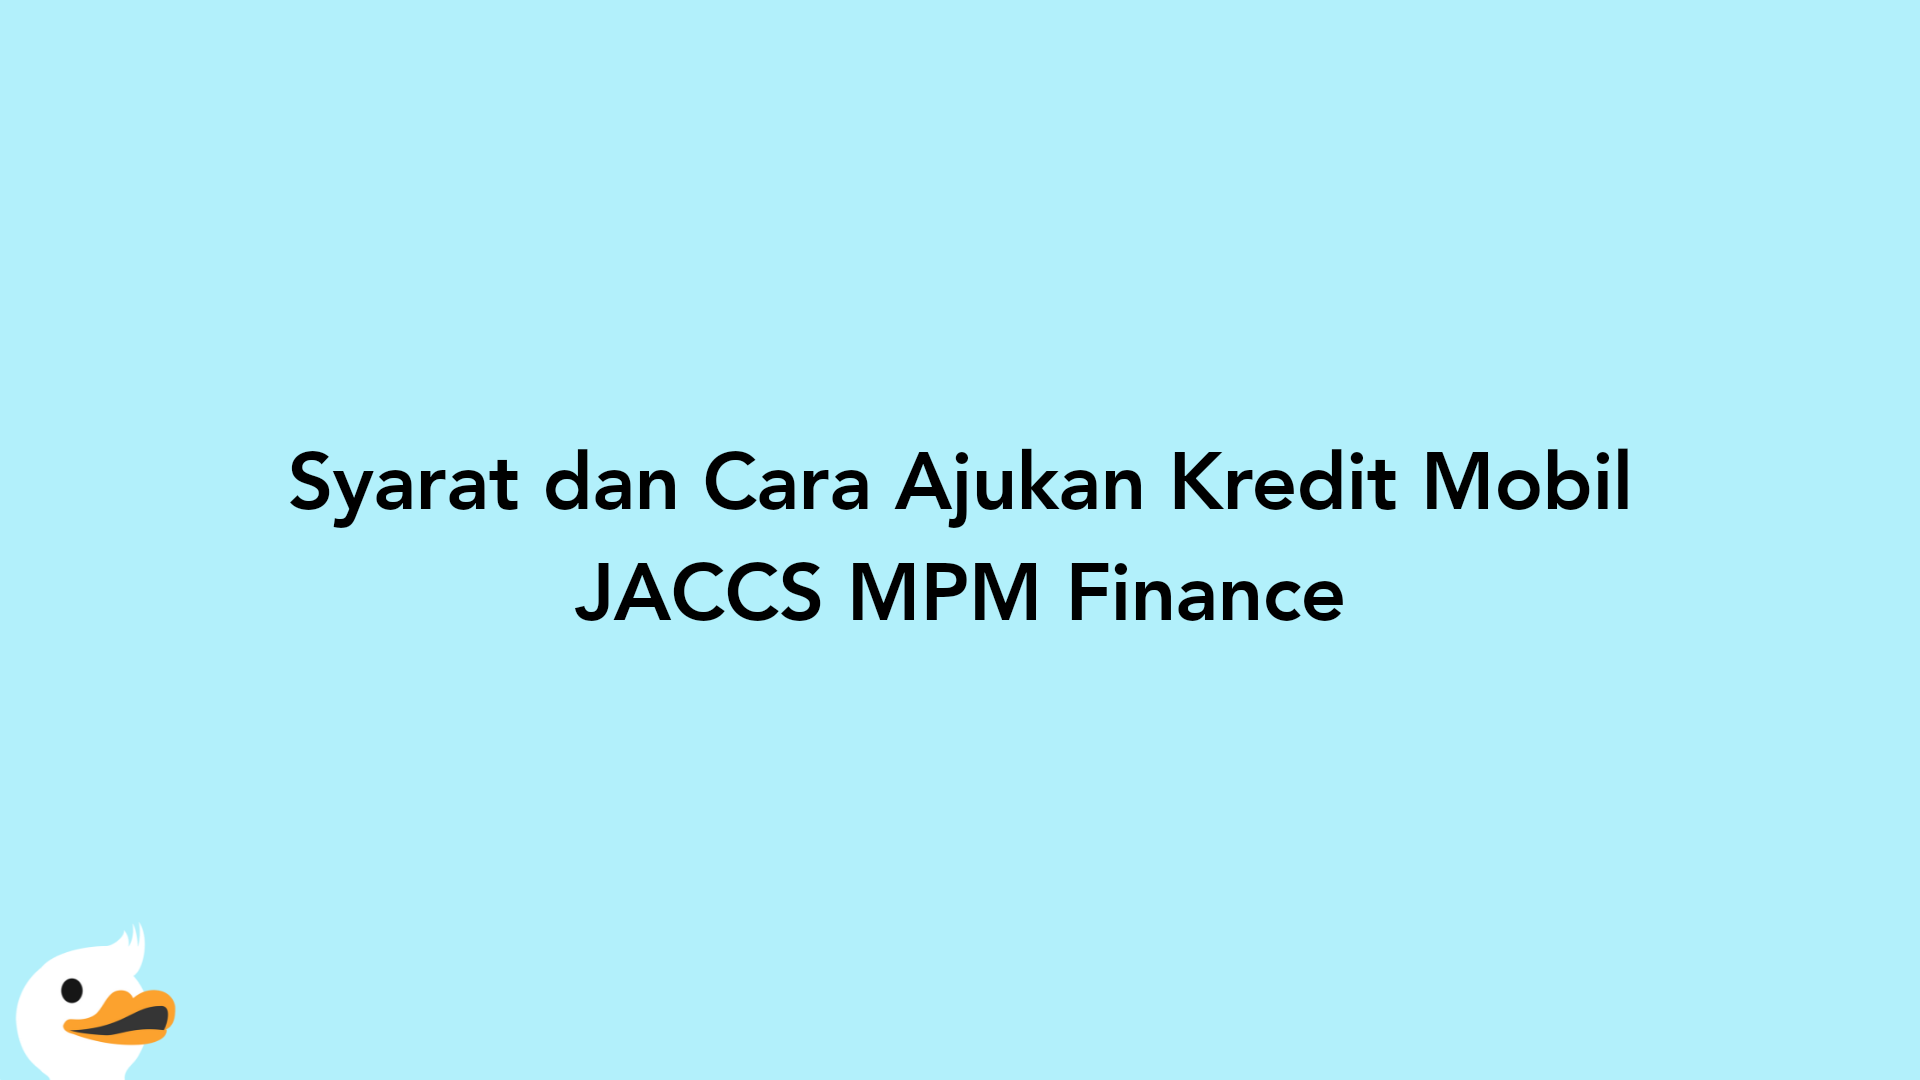 Syarat dan Cara Ajukan Kredit Mobil JACCS MPM Finance